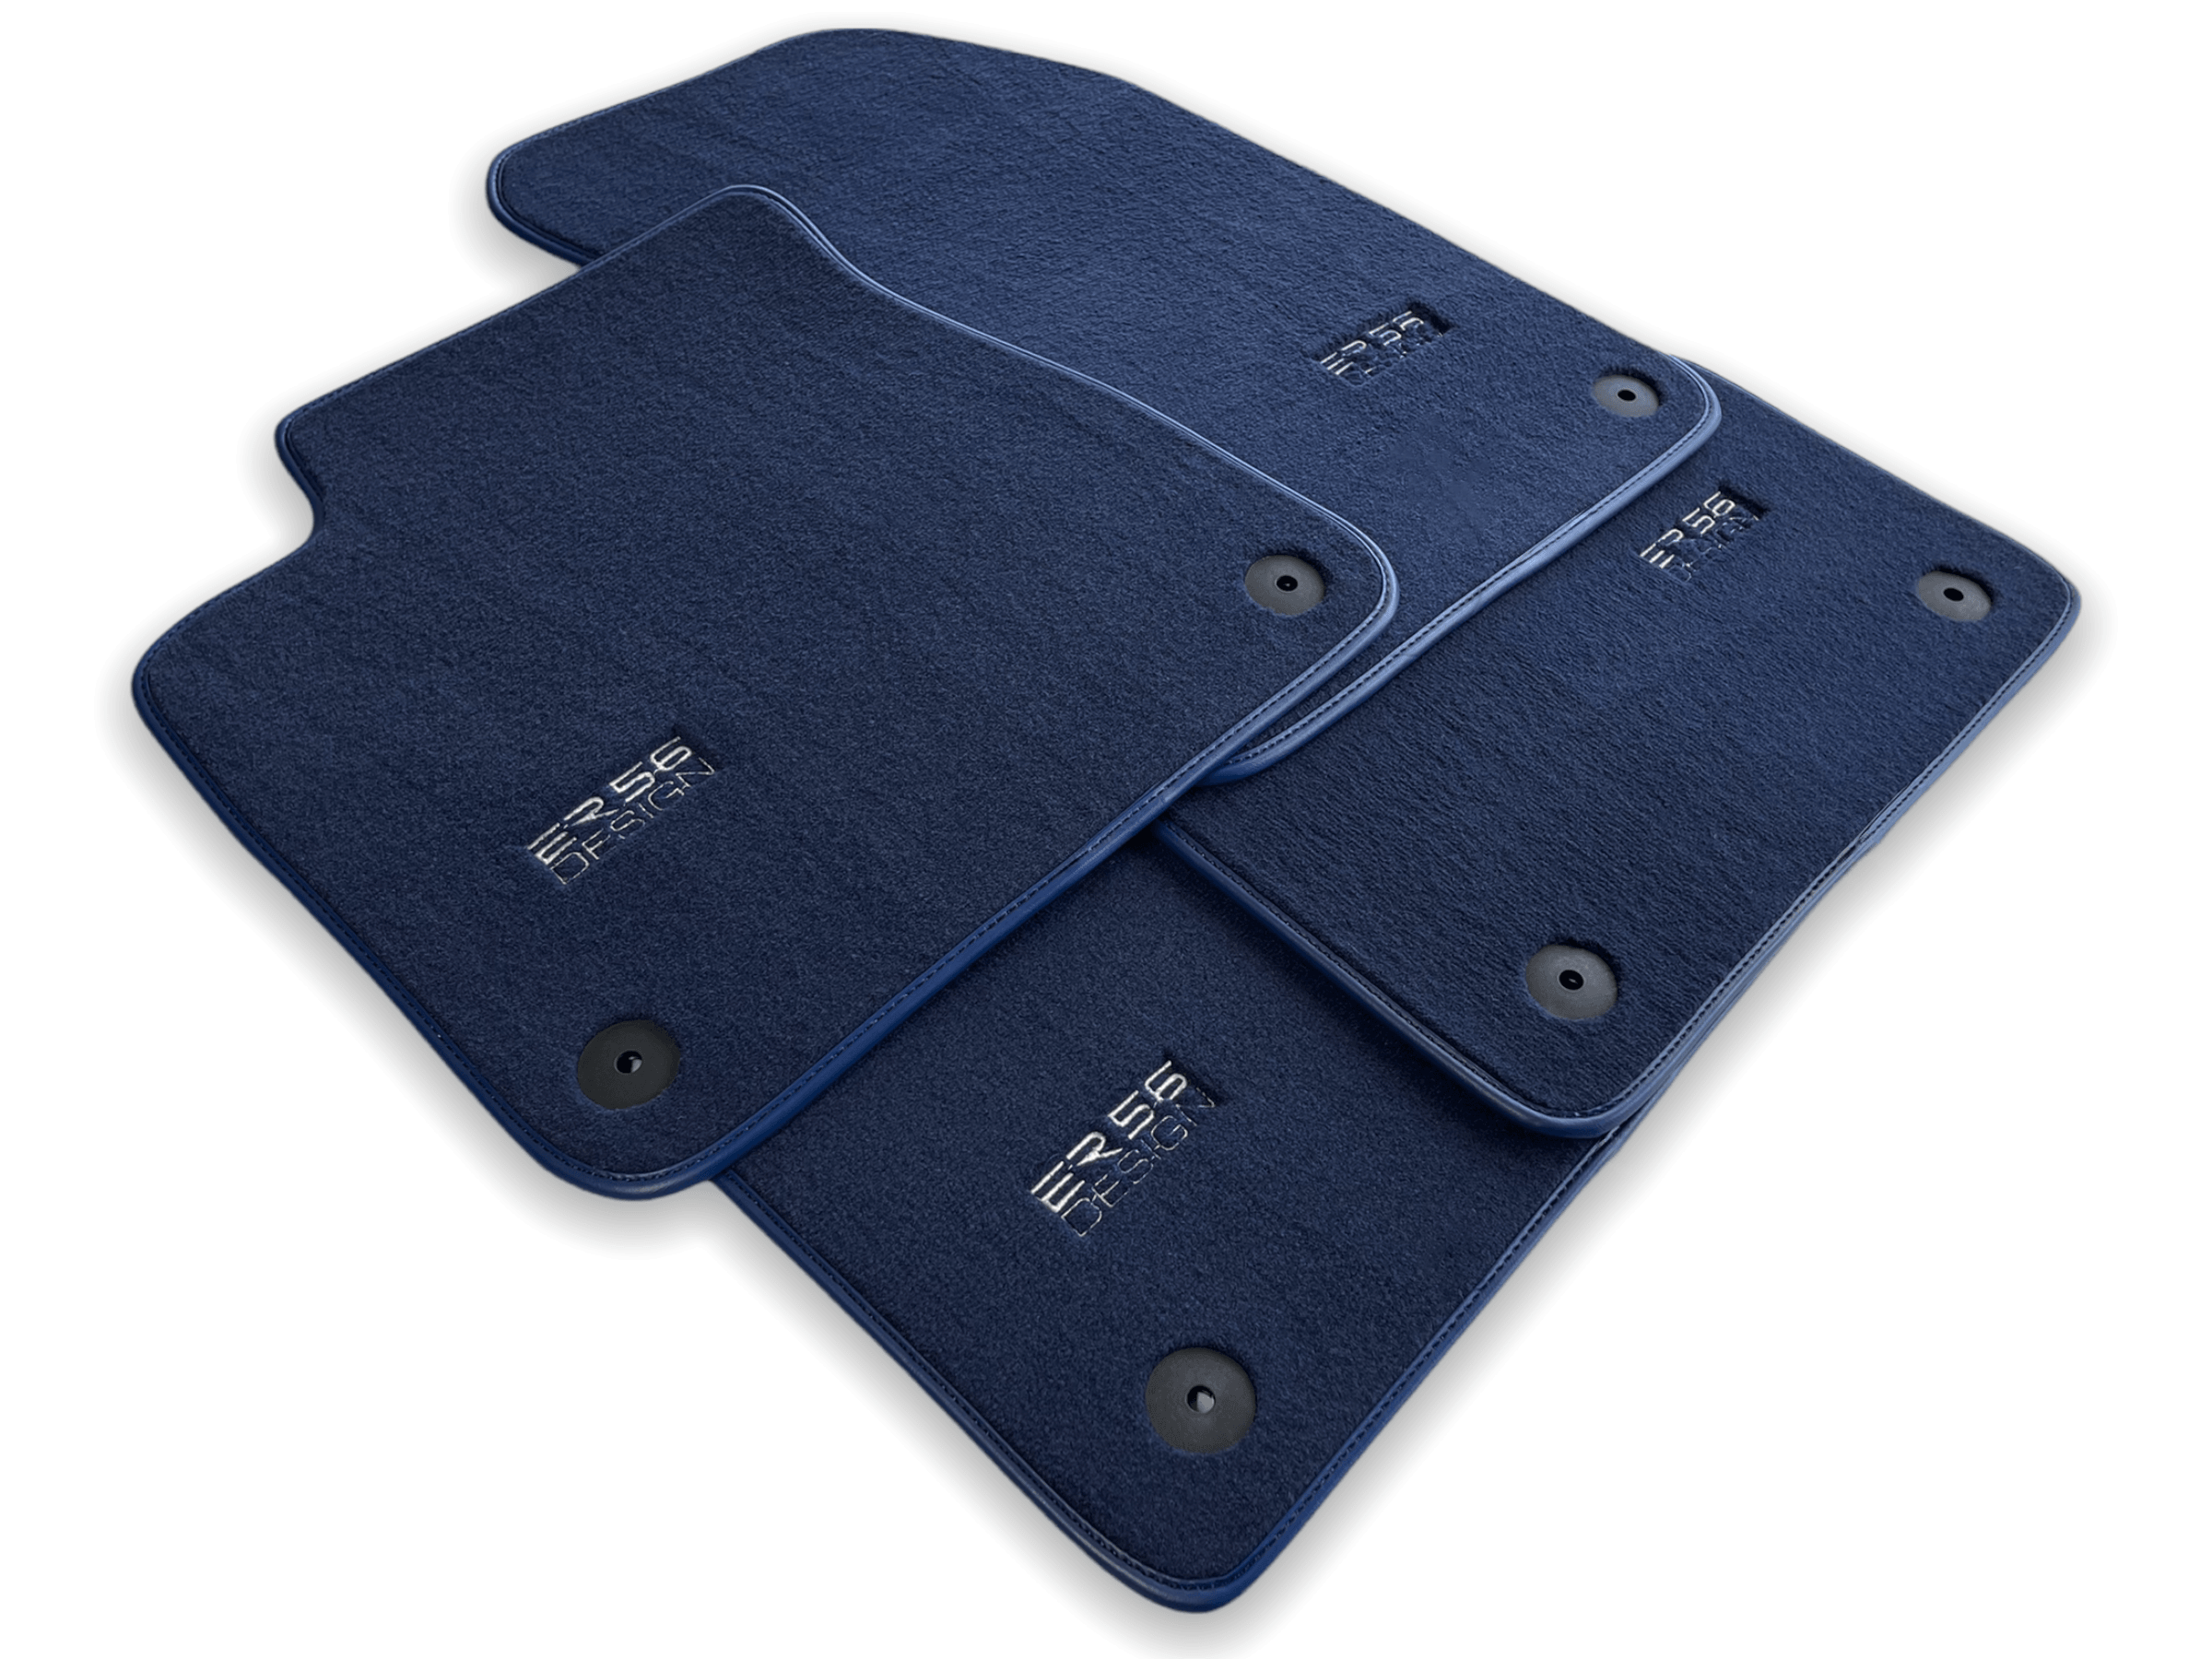 Dark Blue Floor Mats for Audi A3 - 5-door Sportback (2013-2020) | ER56 Design